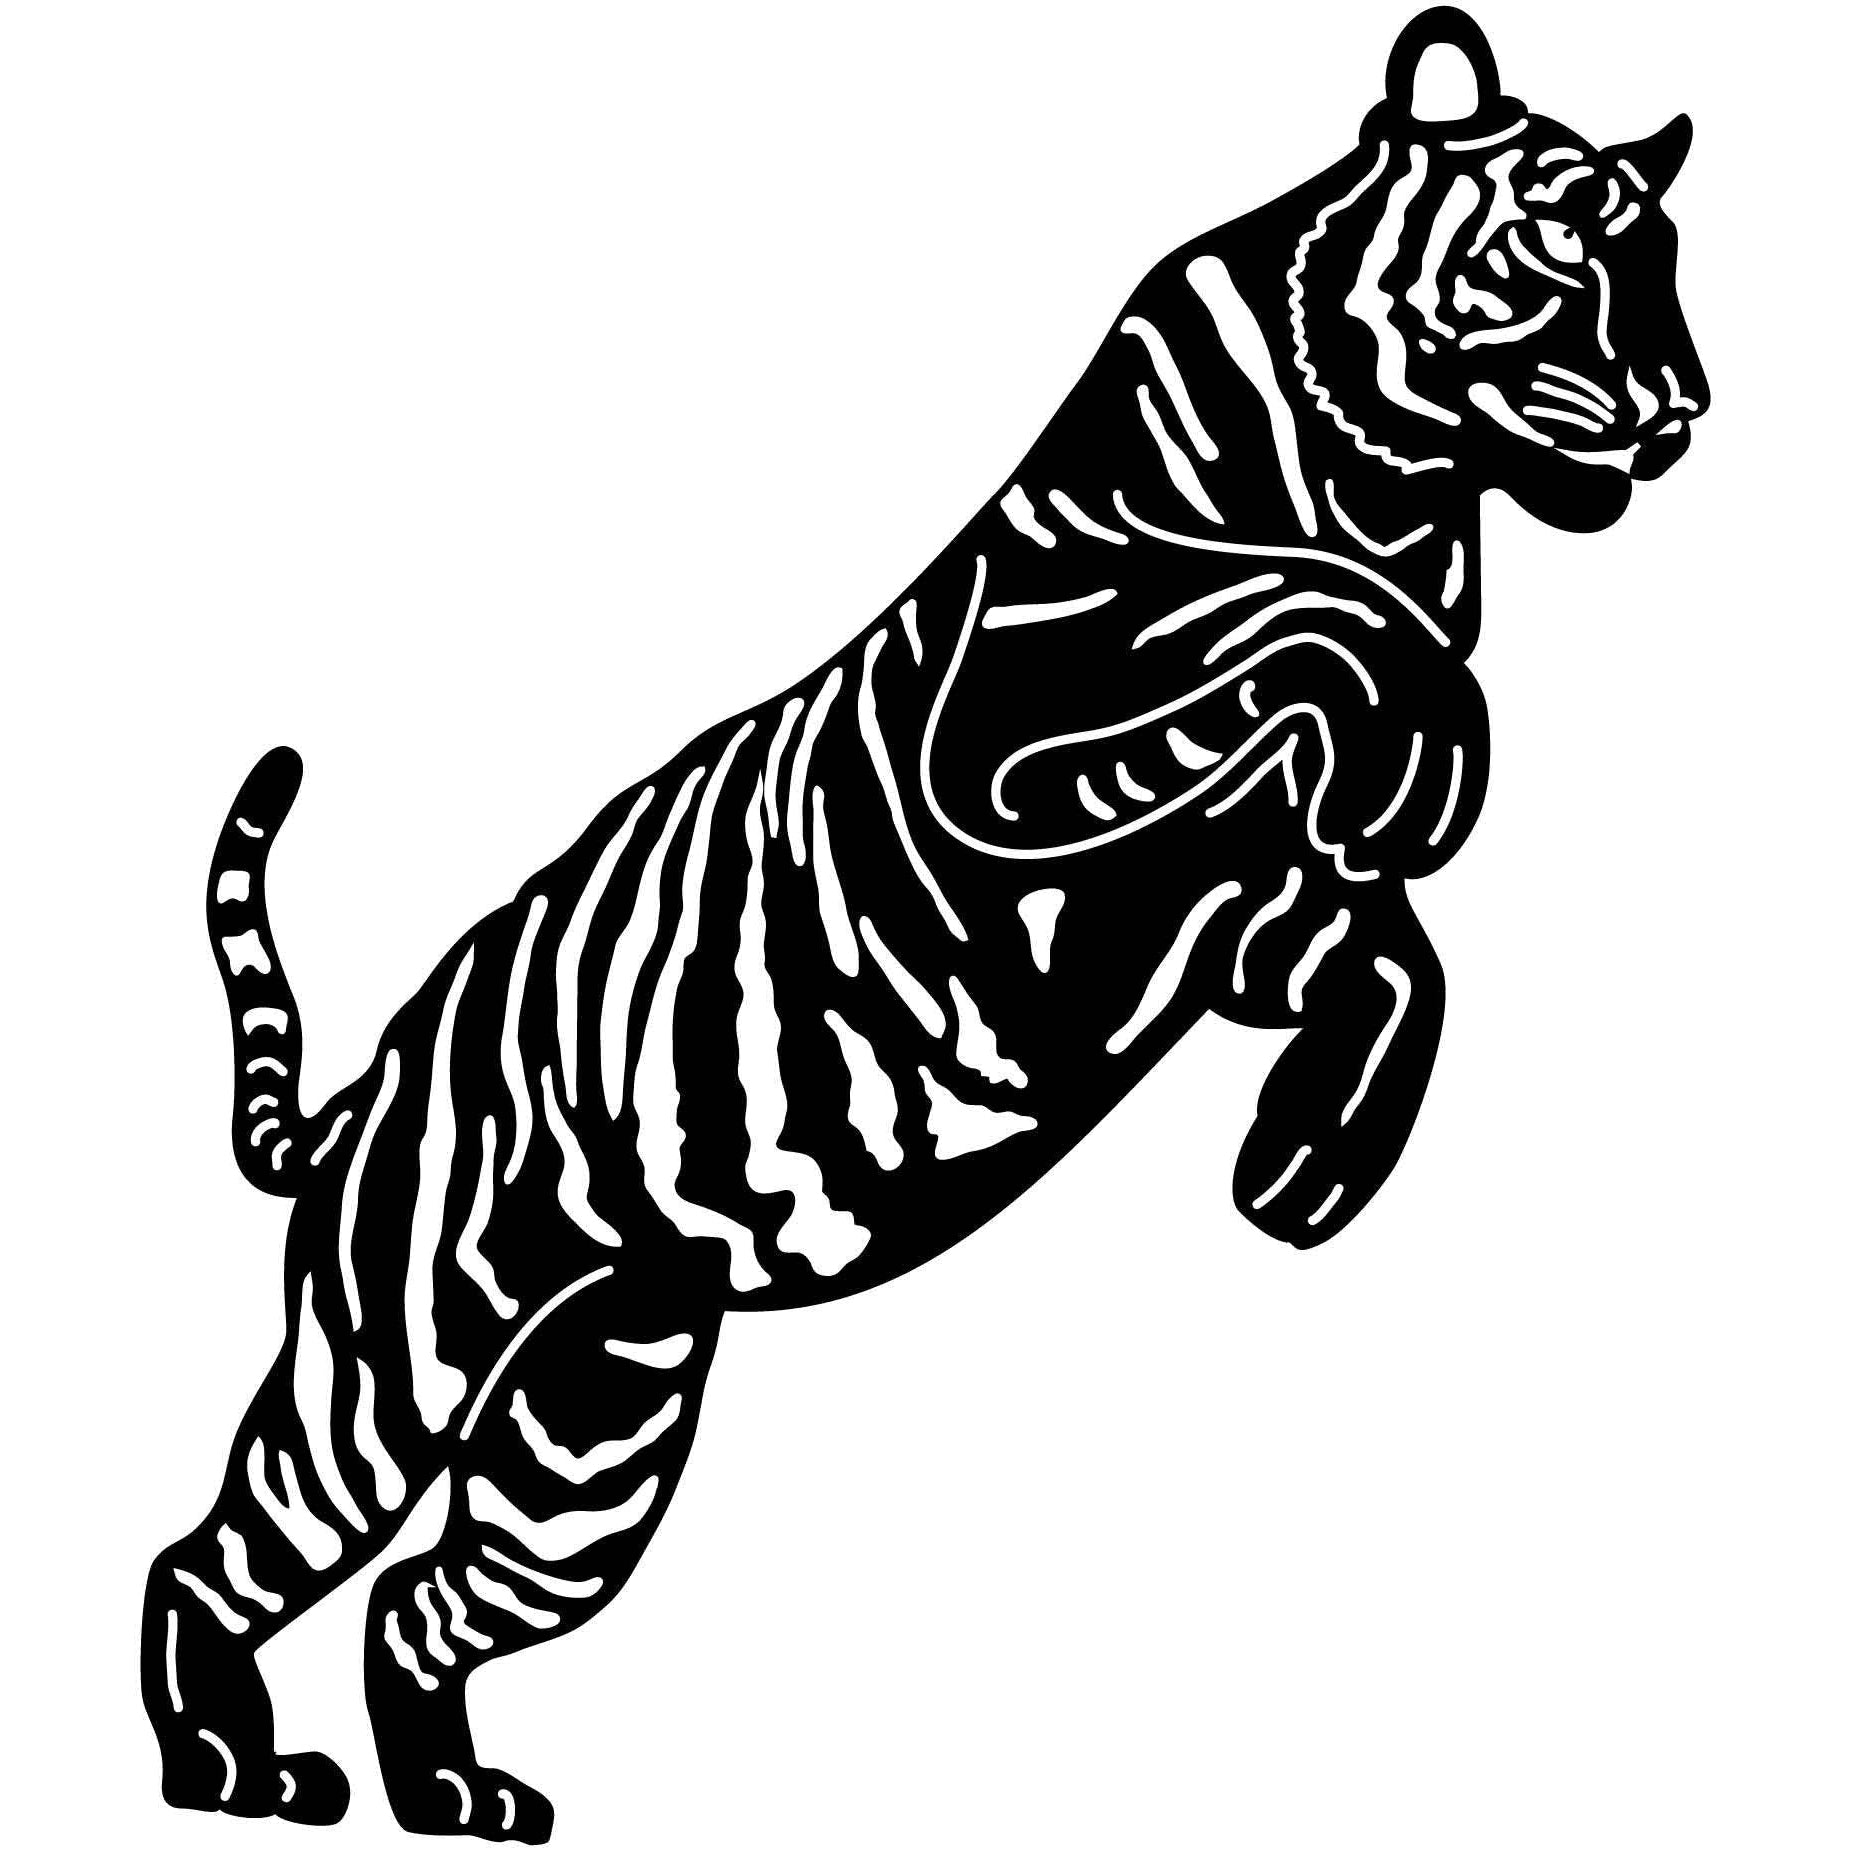 Bengal Tiger Jumping-DXFforCNC.com-DXF Files cut ready cnc machines